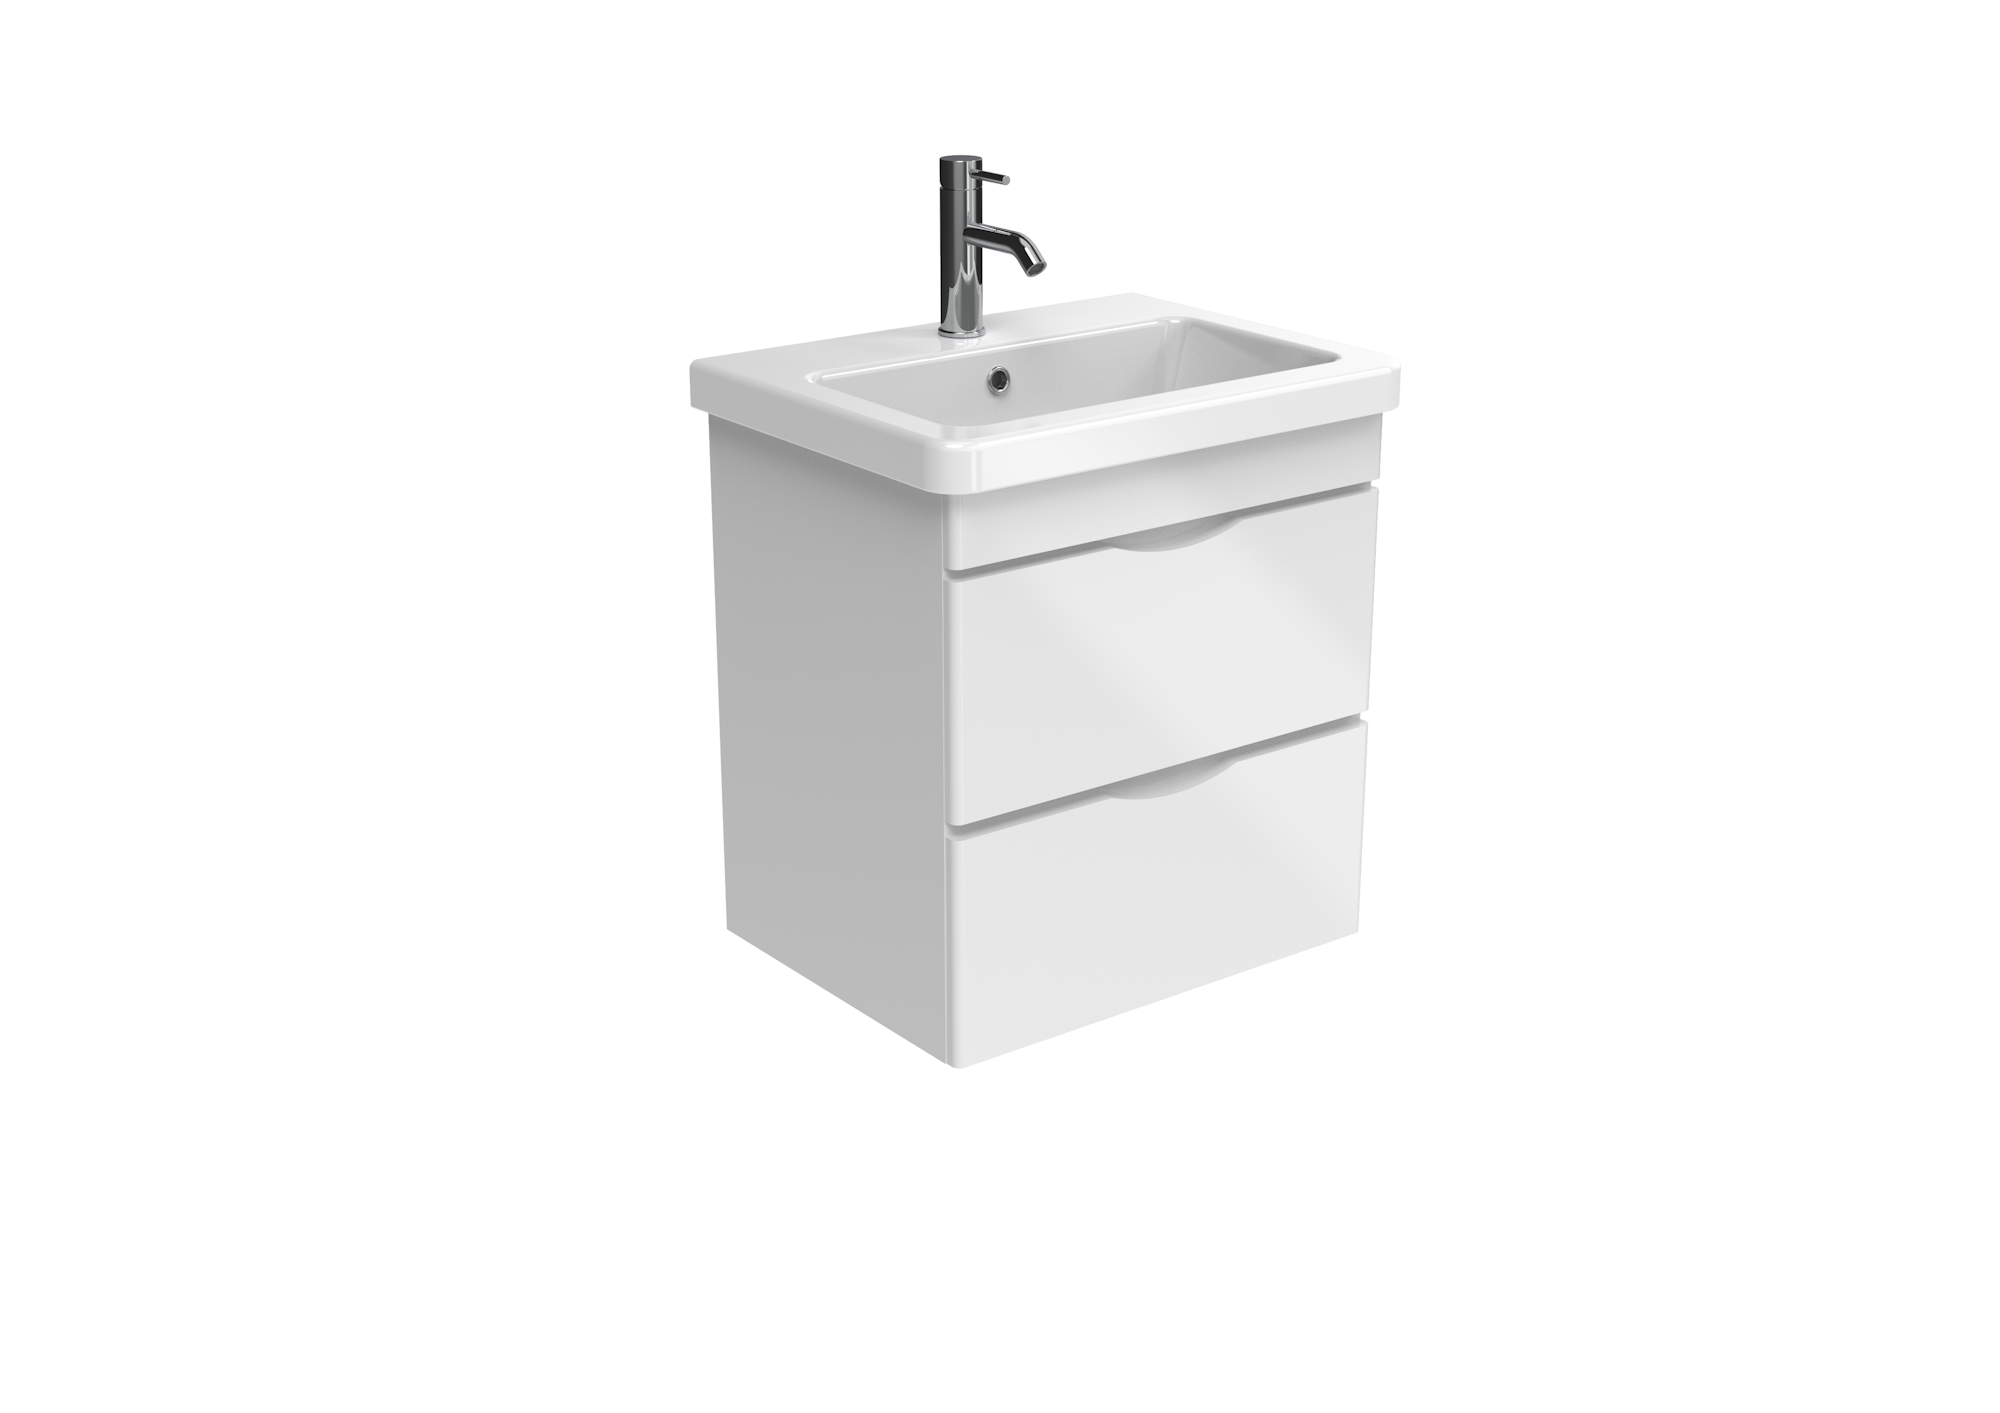 INDIGO 60cm 2 drawer wall mounted unit - Gloss White